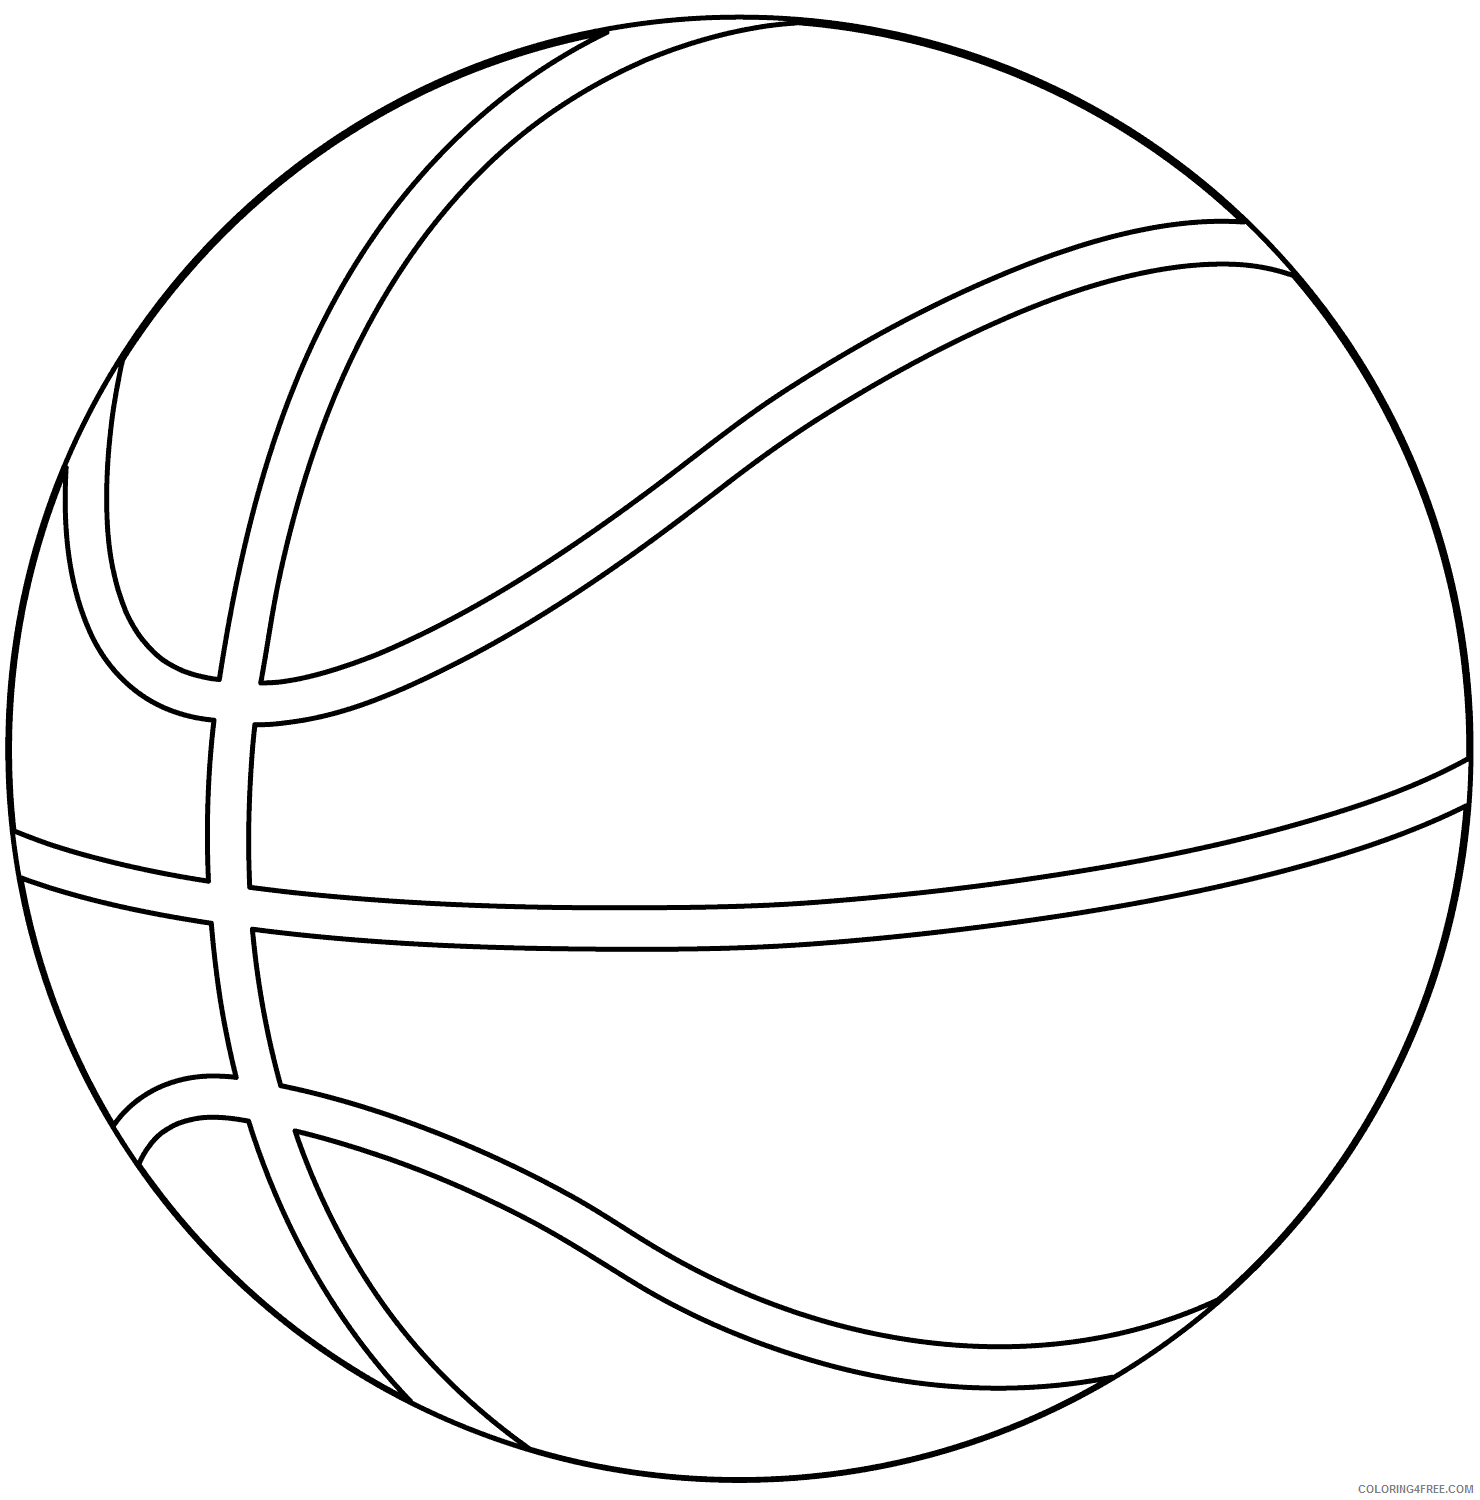 Basketball Coloring Pages Basketball Ball Printable 2021 0774 Coloring4free Coloring4free Com